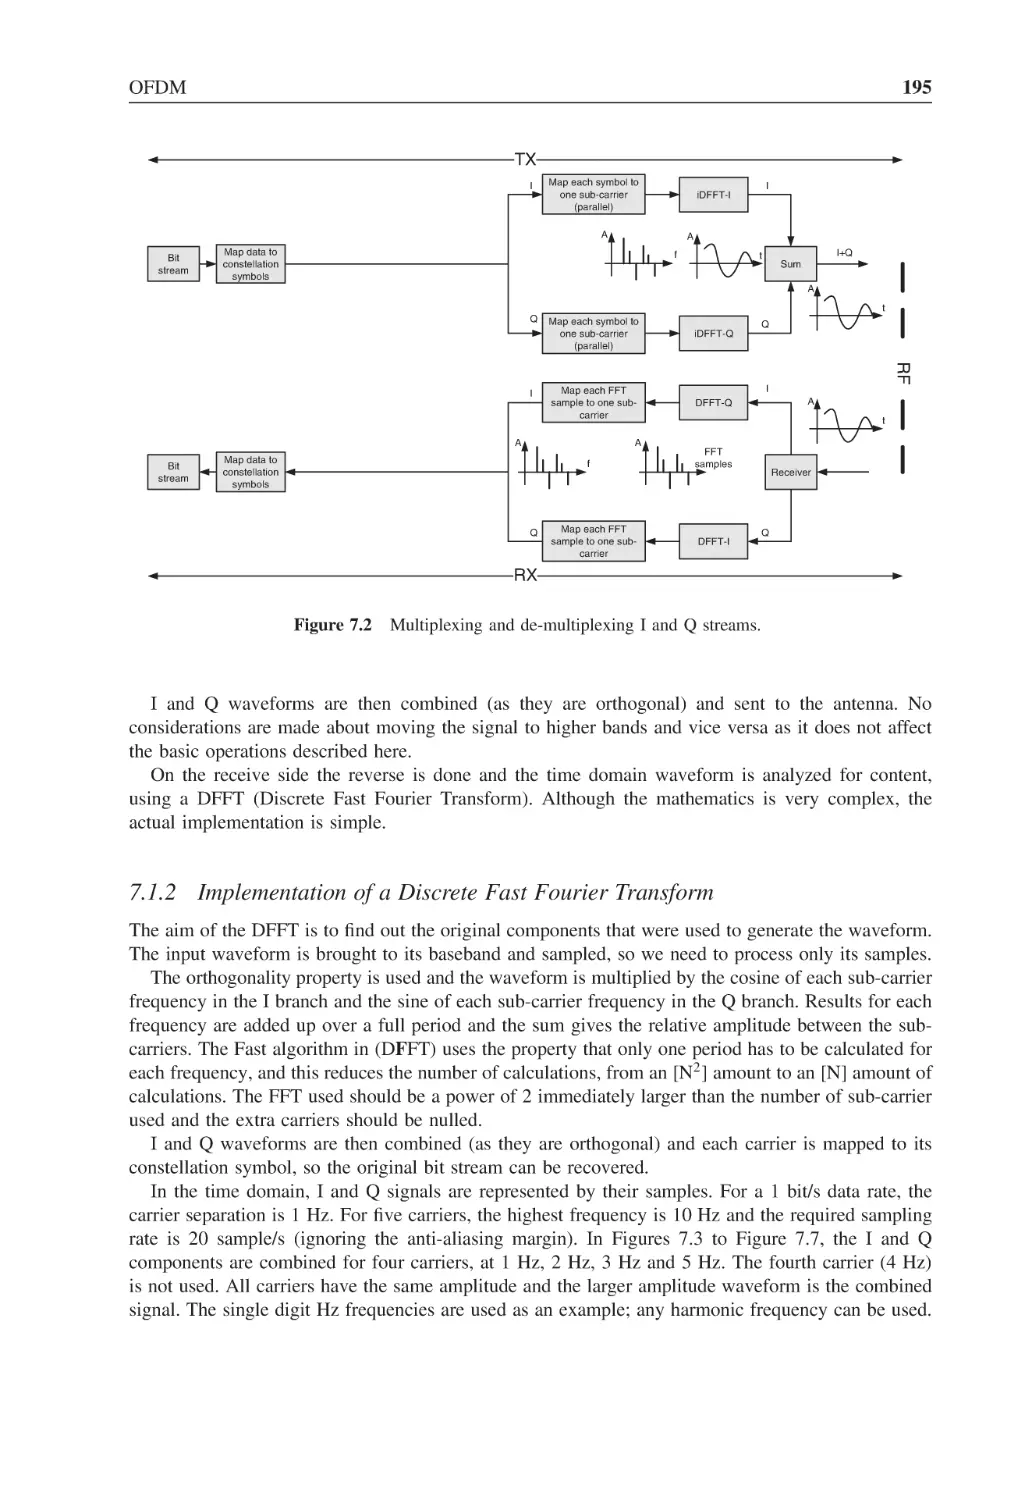 7.1.2 Implementation of a Discrete Fast Fourier Transform